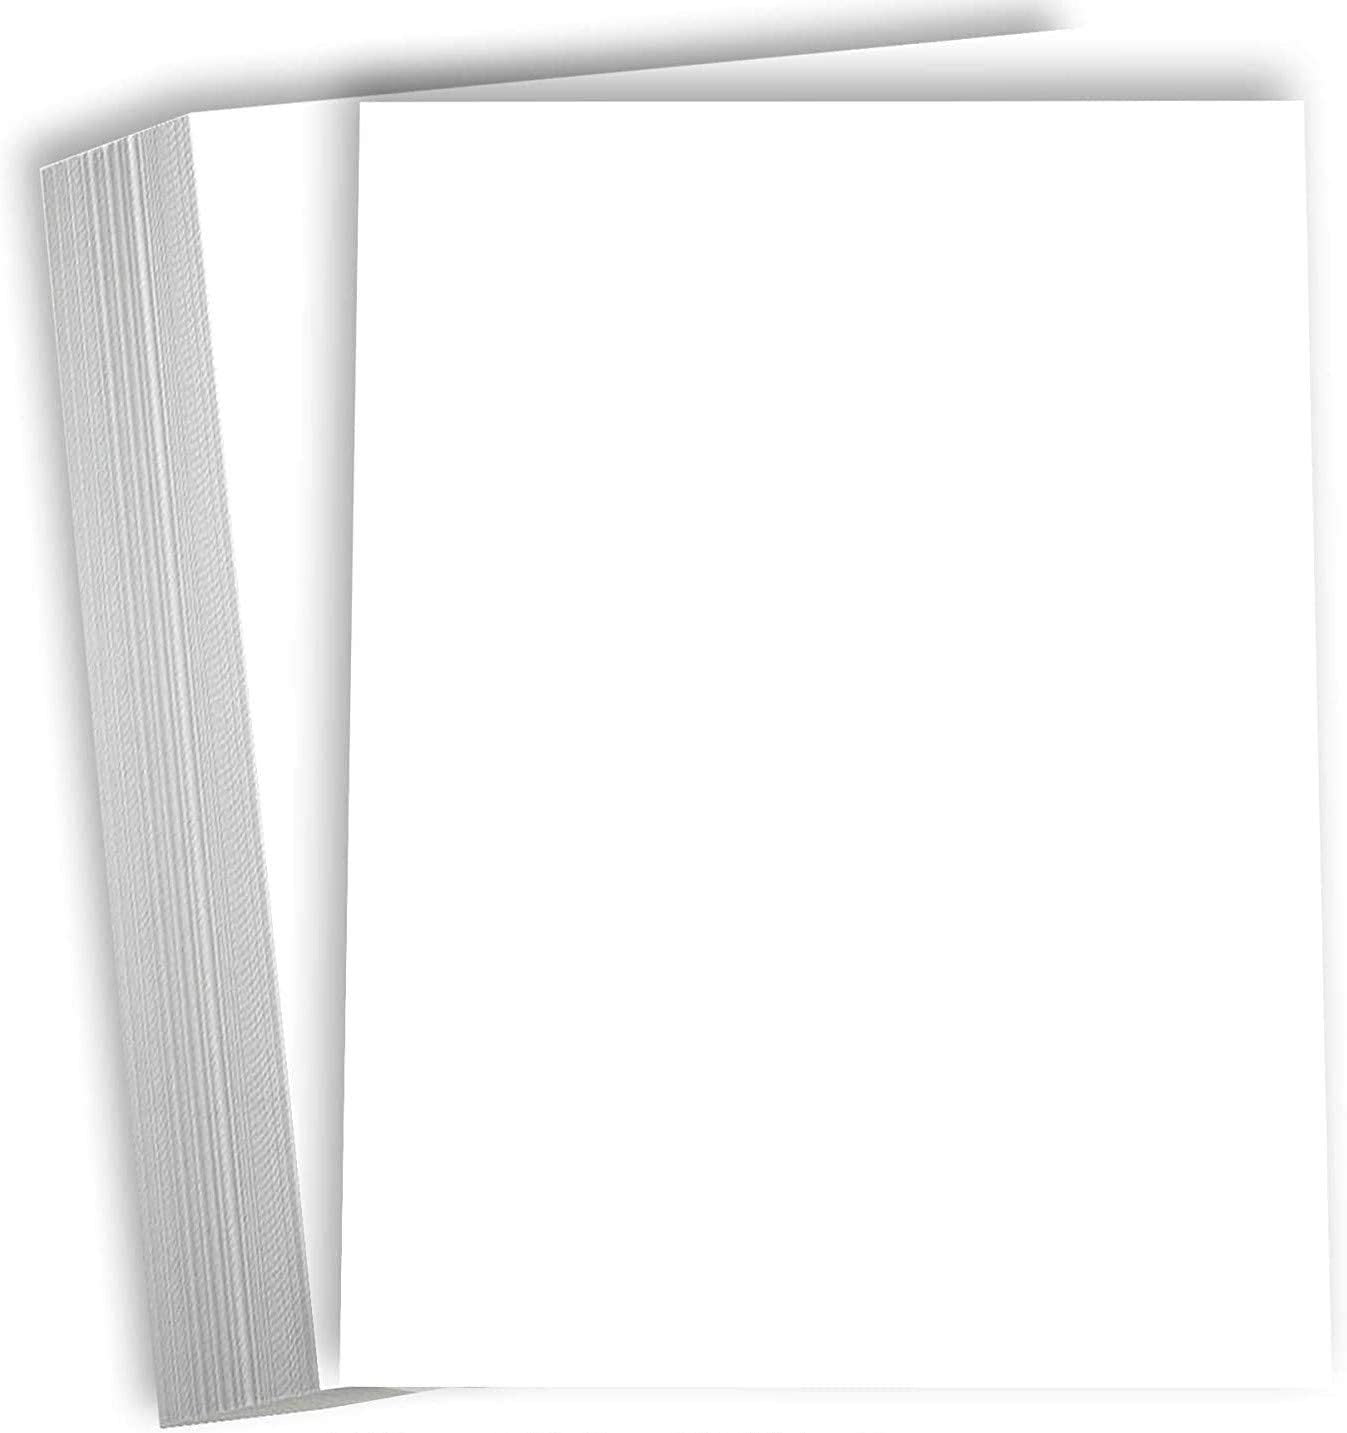 Hamilco Cream Cardstock 11x17 Paper Heavy Weight 80 lb Cover Card Stoc –